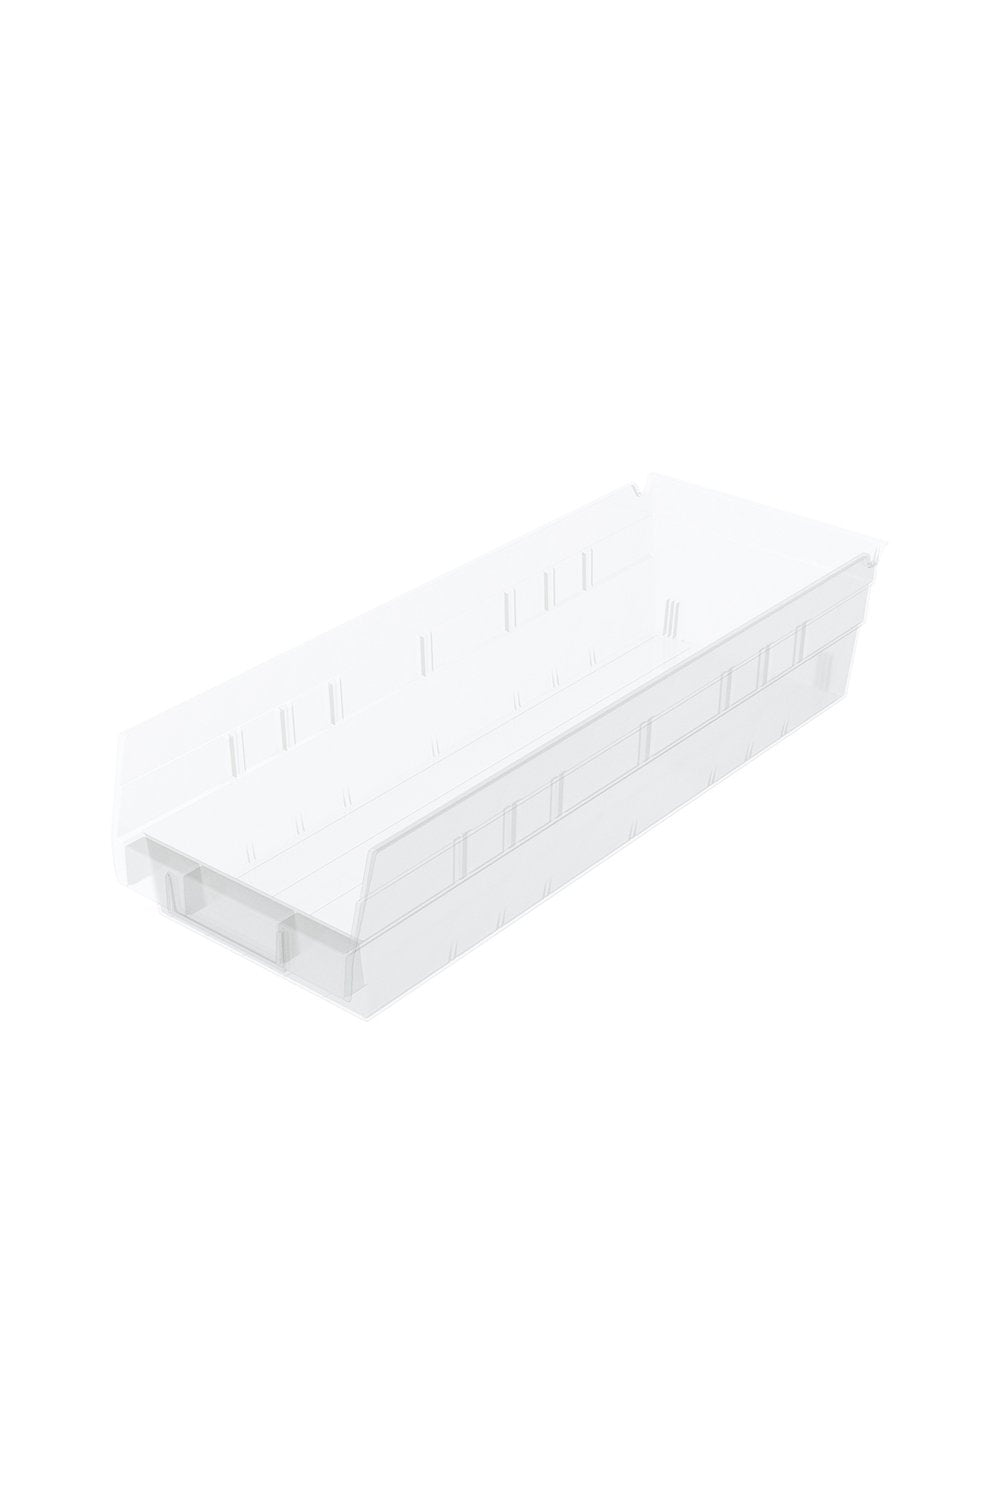 Shelf Bin for 18"D Shelves Bins & Containers Acart 17-7/8'' x 6-5/8'' x 4'' Clear 